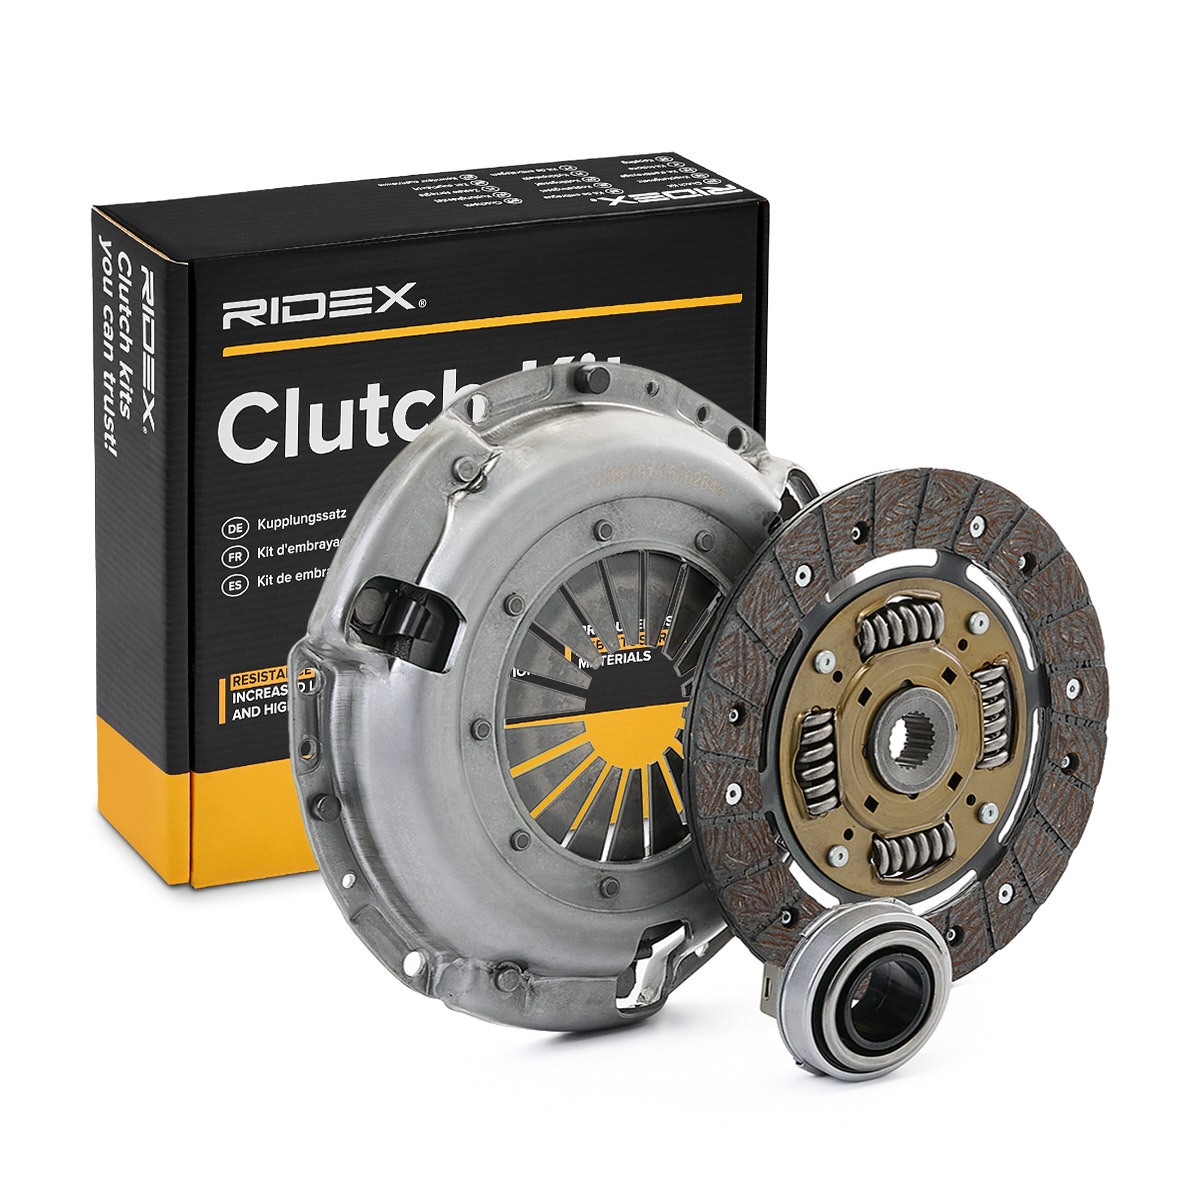 Buy Clutch kit RIDEX 479C3189 - Clutch system parts HONDA LOGO online